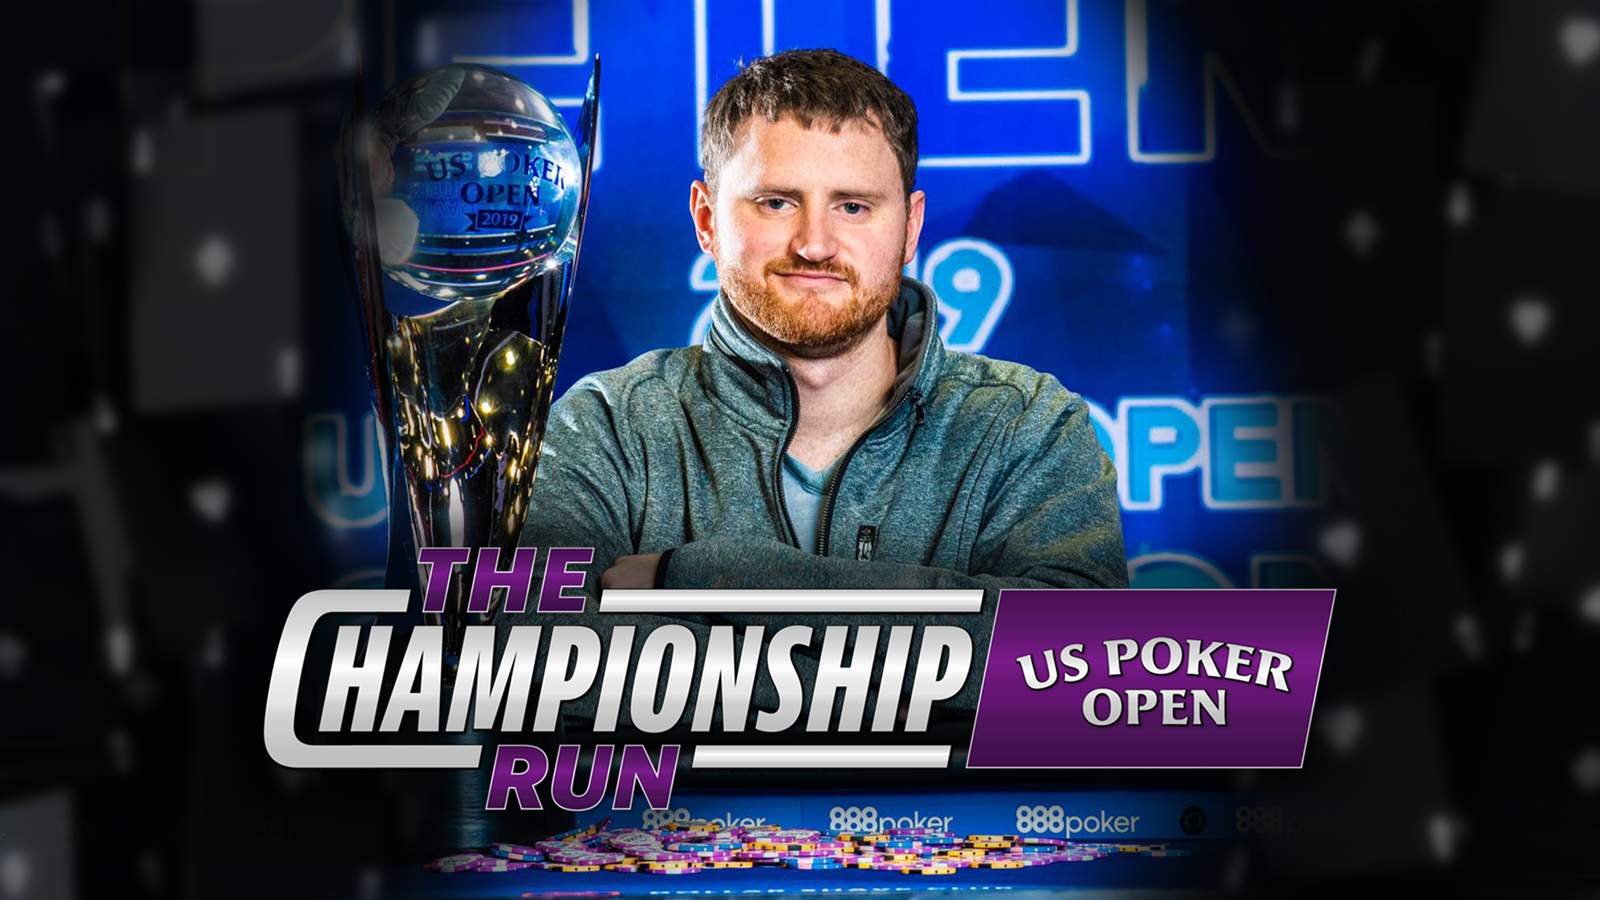 Watch The Championship Run: U.S. Poker Open | David Peters on PokerGO Now!